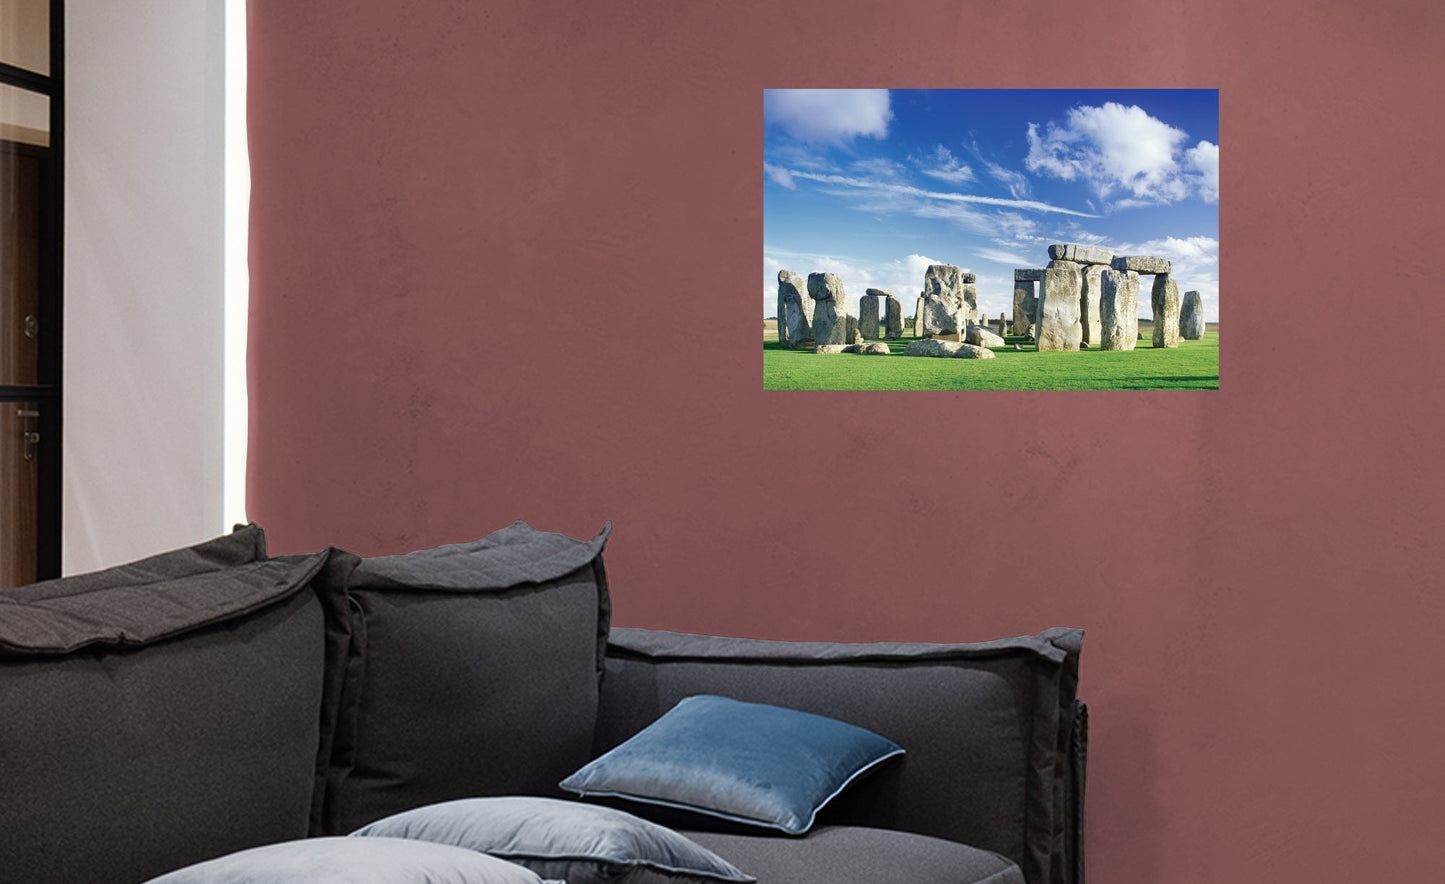 Popular Landmarks: Stonehenge Realistic Poster - Removable Adhesive Decal